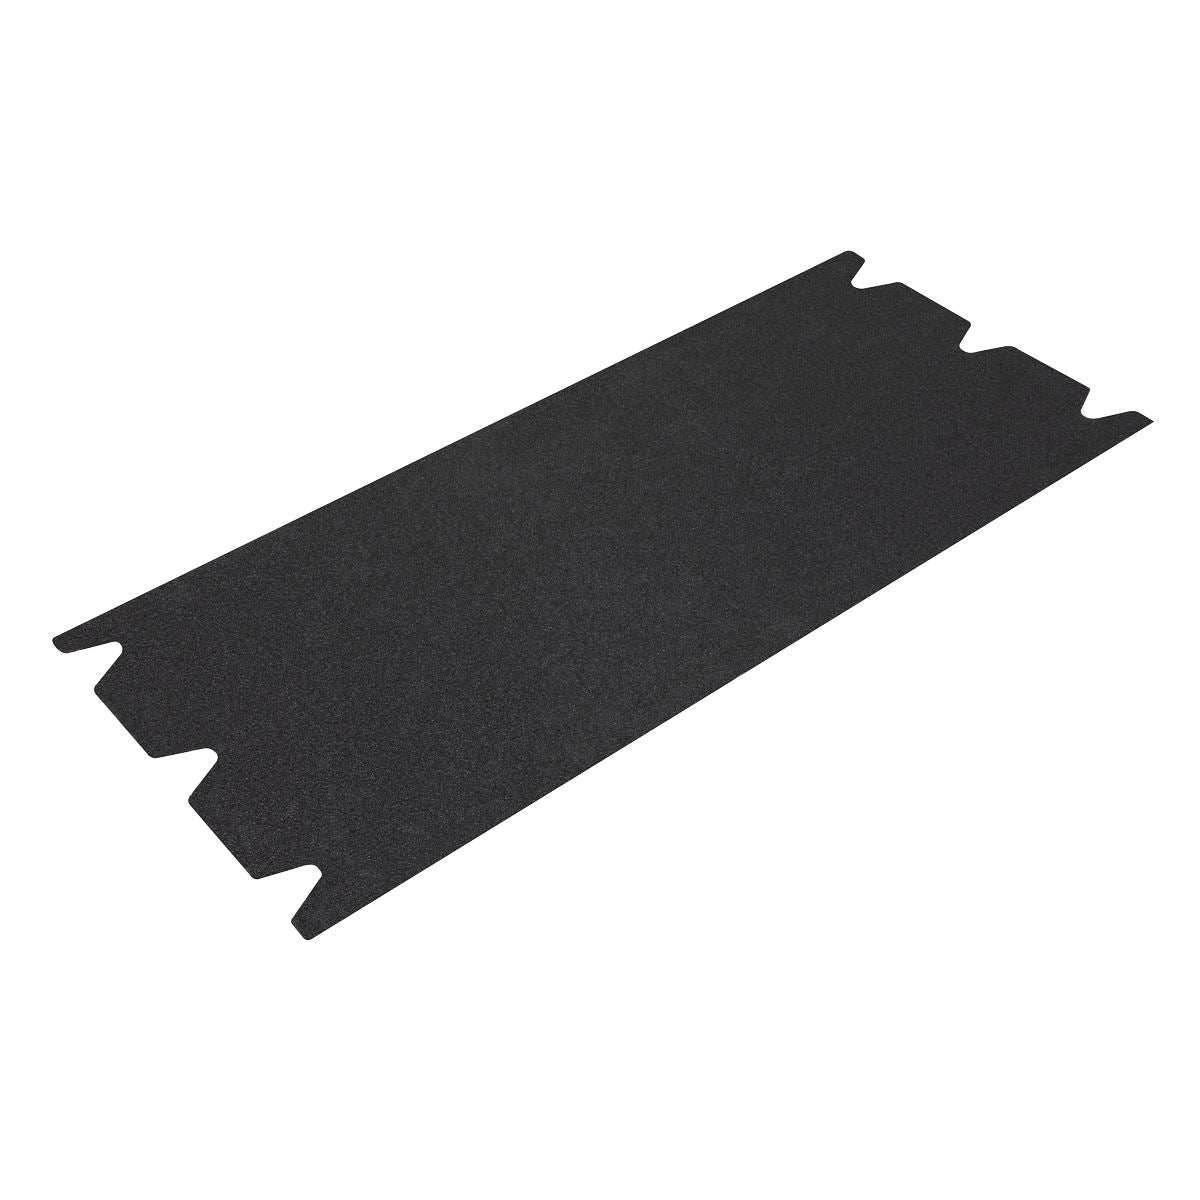 Sealey Floor Sanding Sheet 203 x 495mm 36Grit - Pack of 25